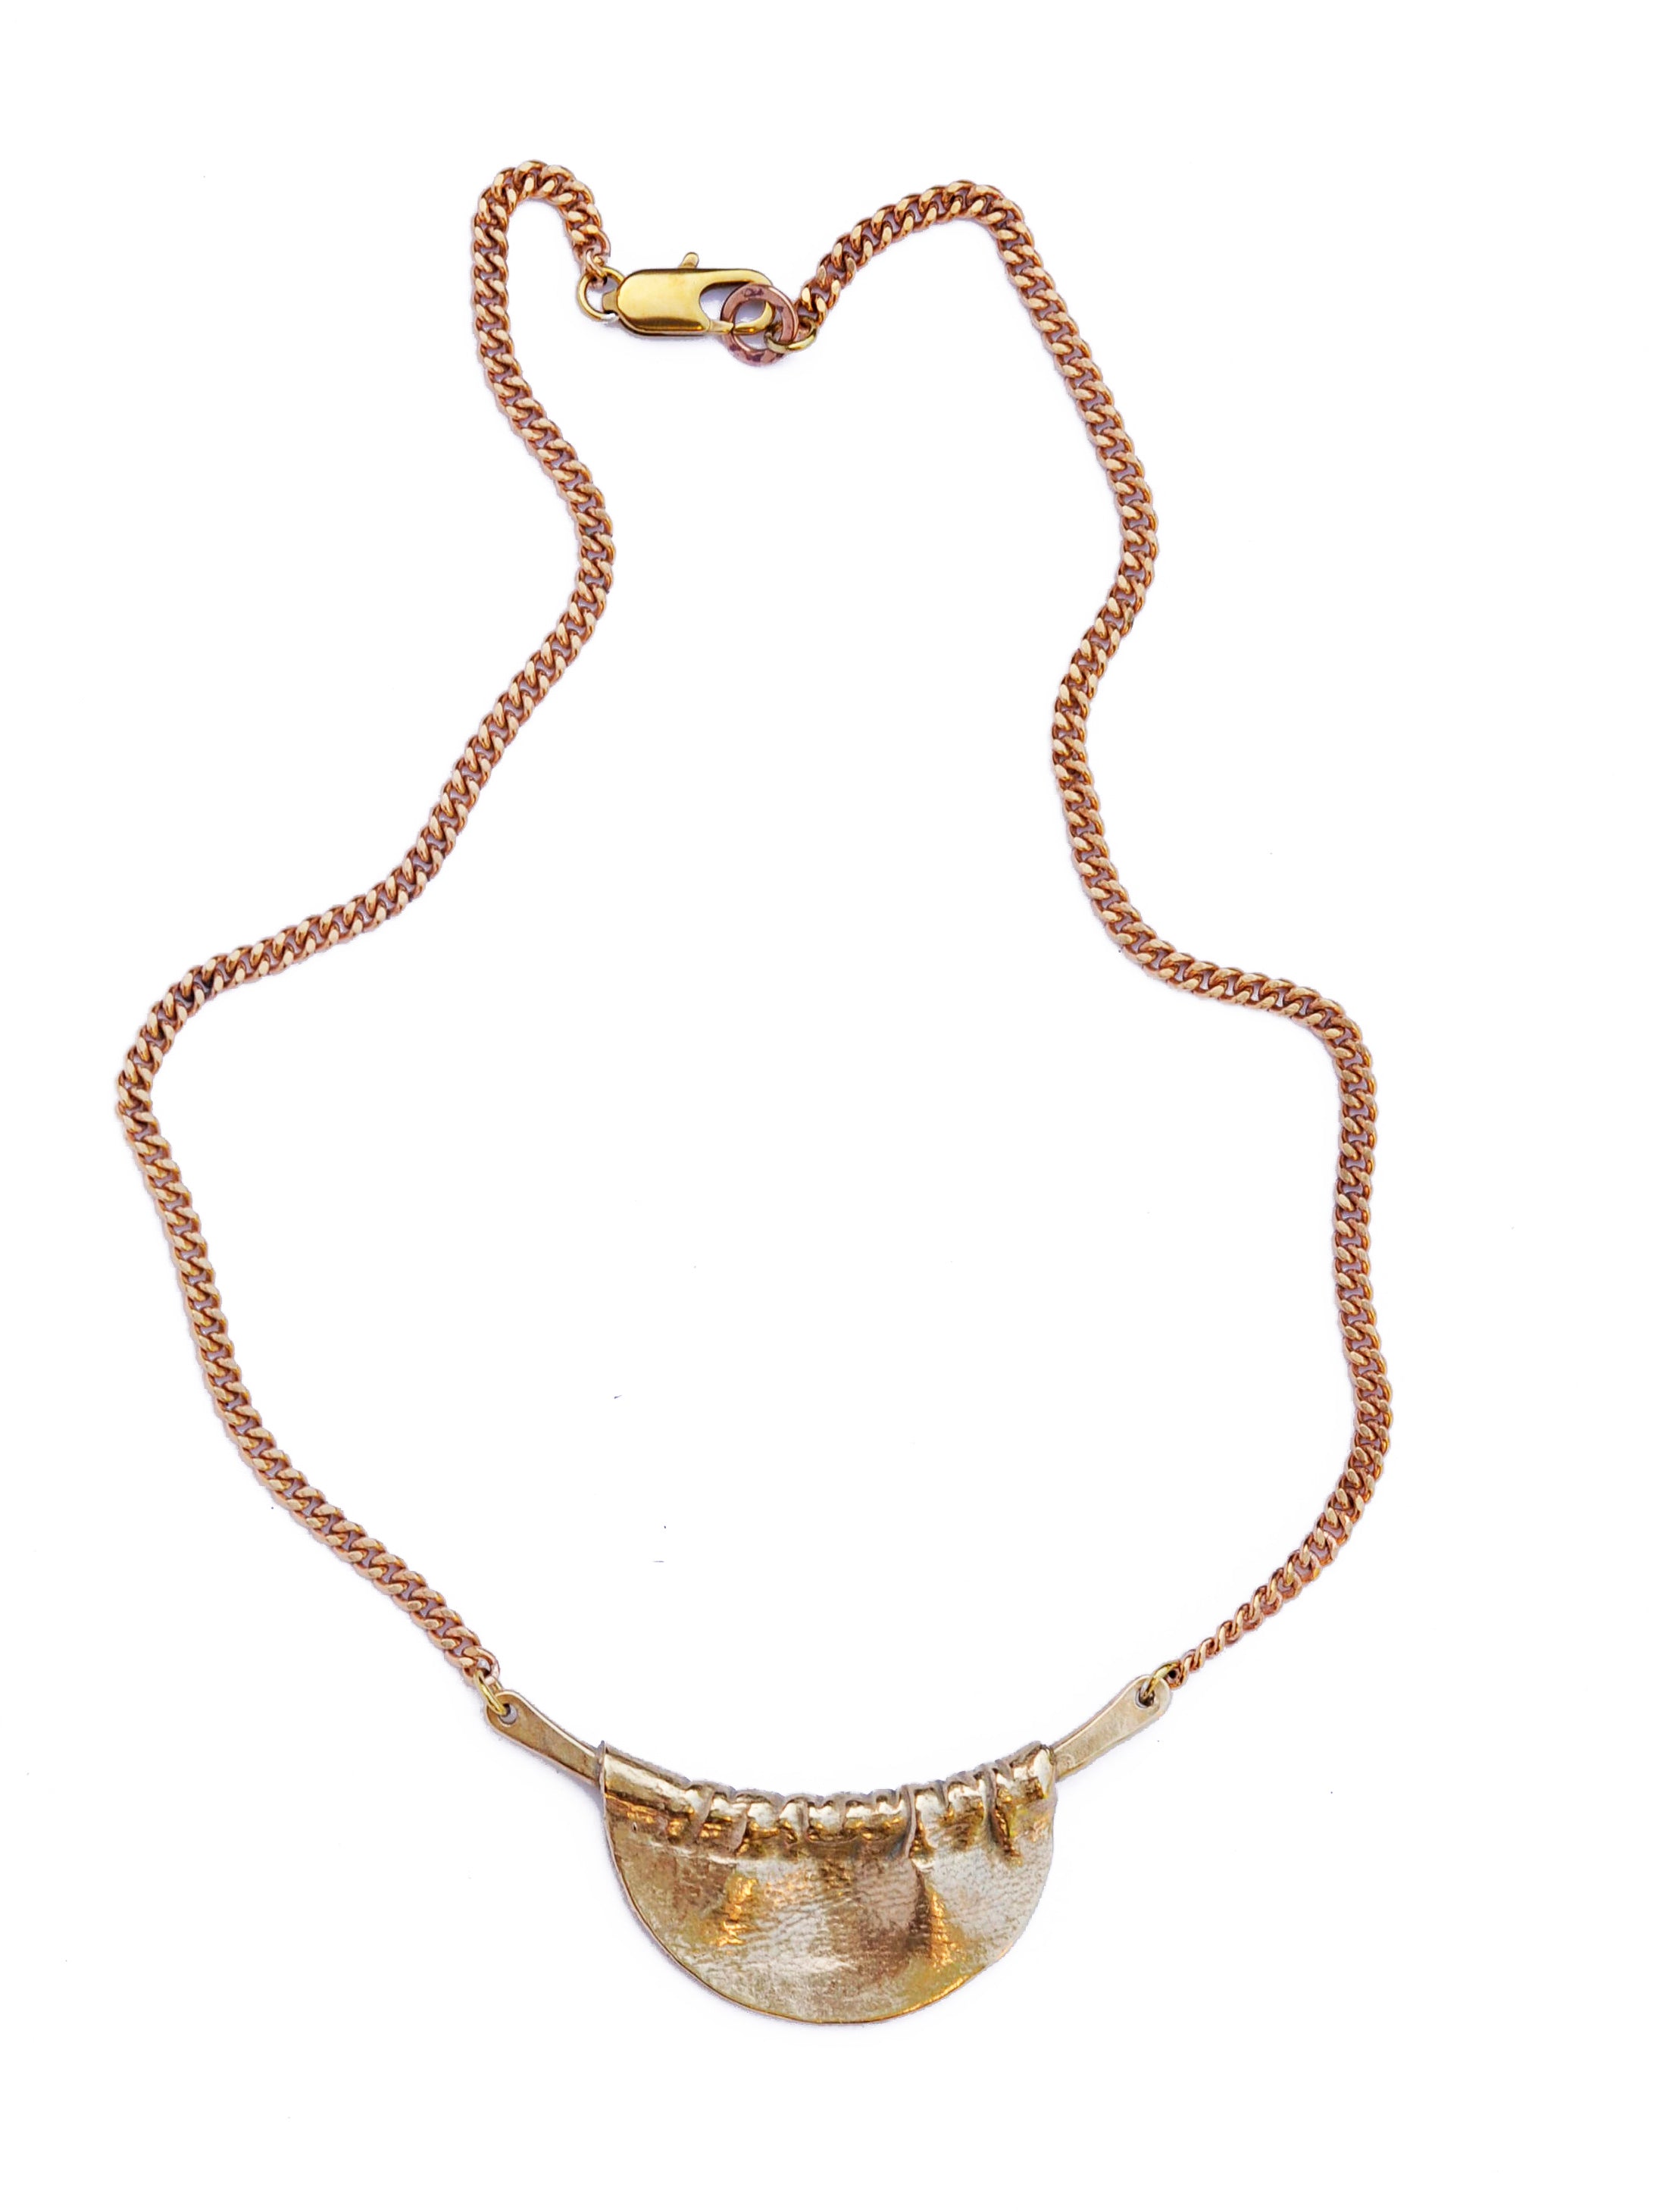 SALE -  GATHER necklace